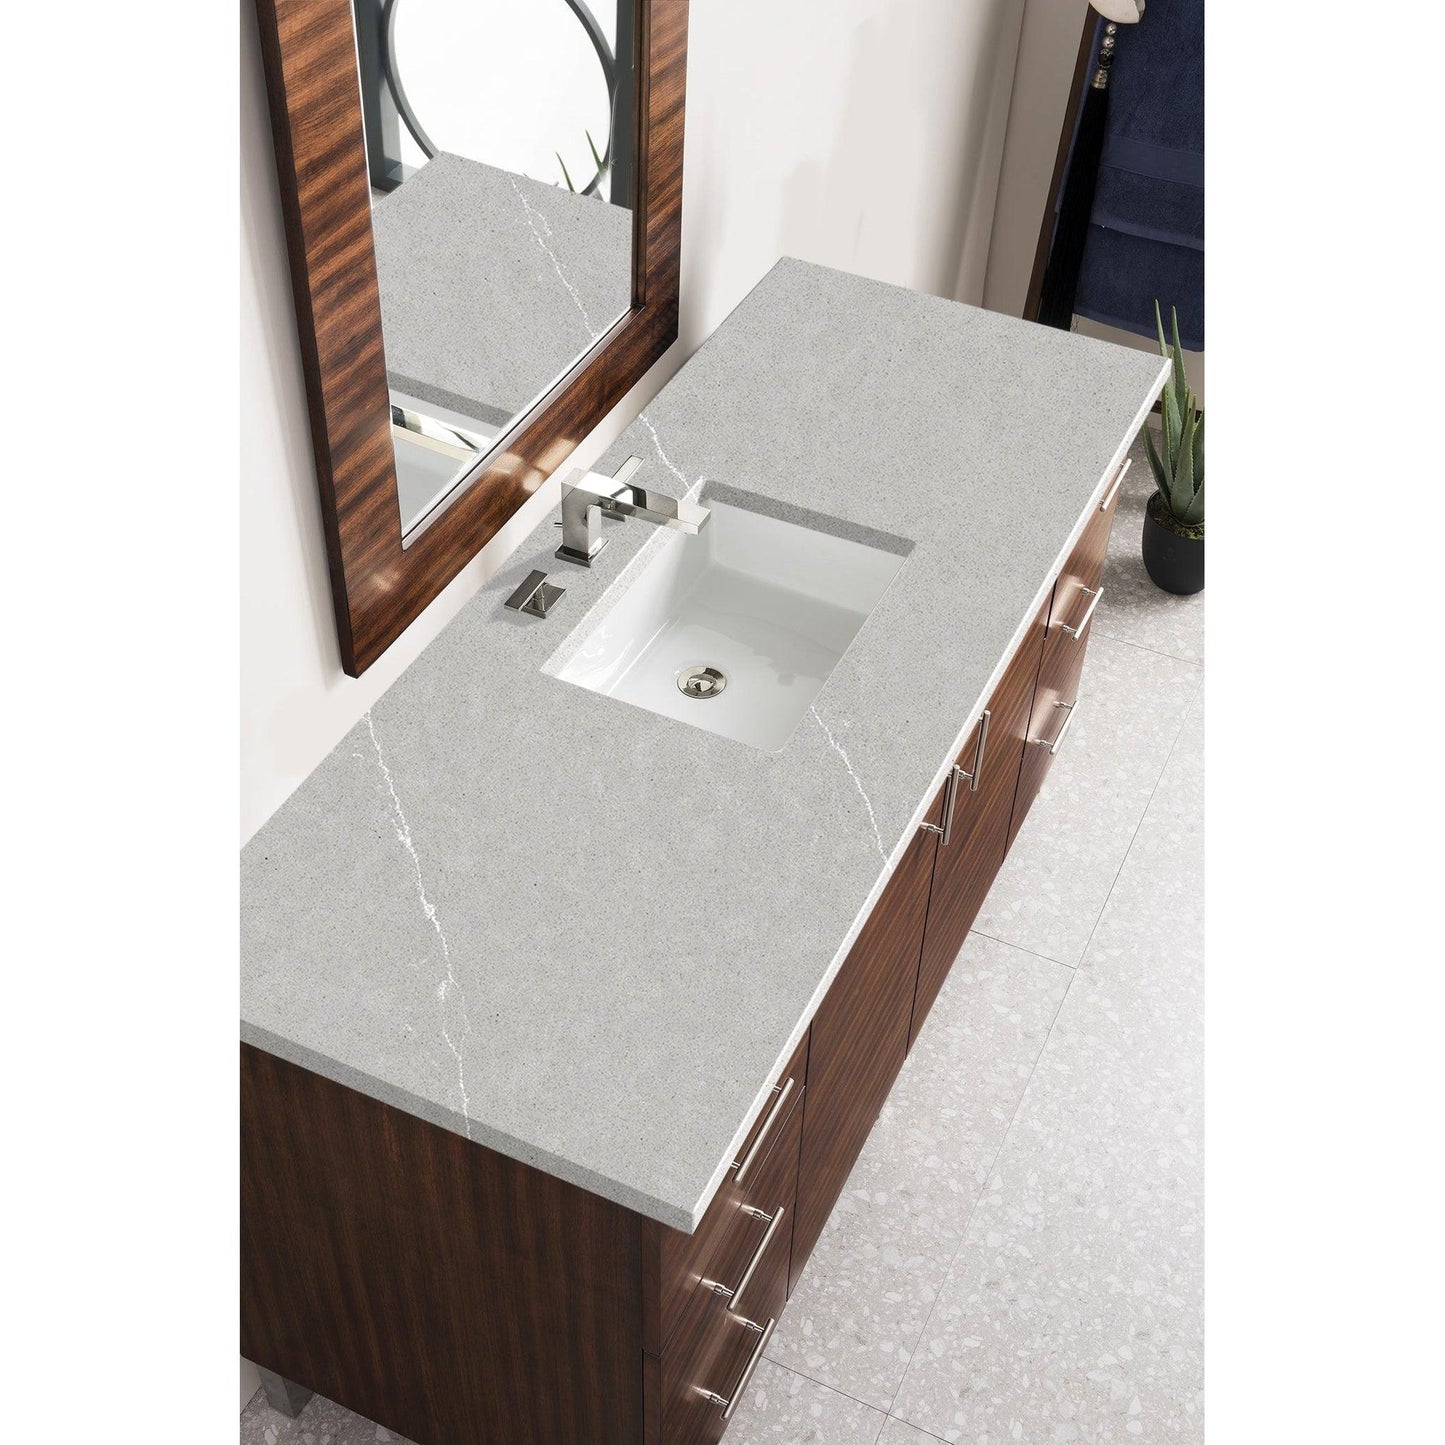 James Martin Metropolitan 60" Single American Walnut Bathroom Vanity With 1" Eternal Serena Quartz Top and Rectangular Ceramic Sink